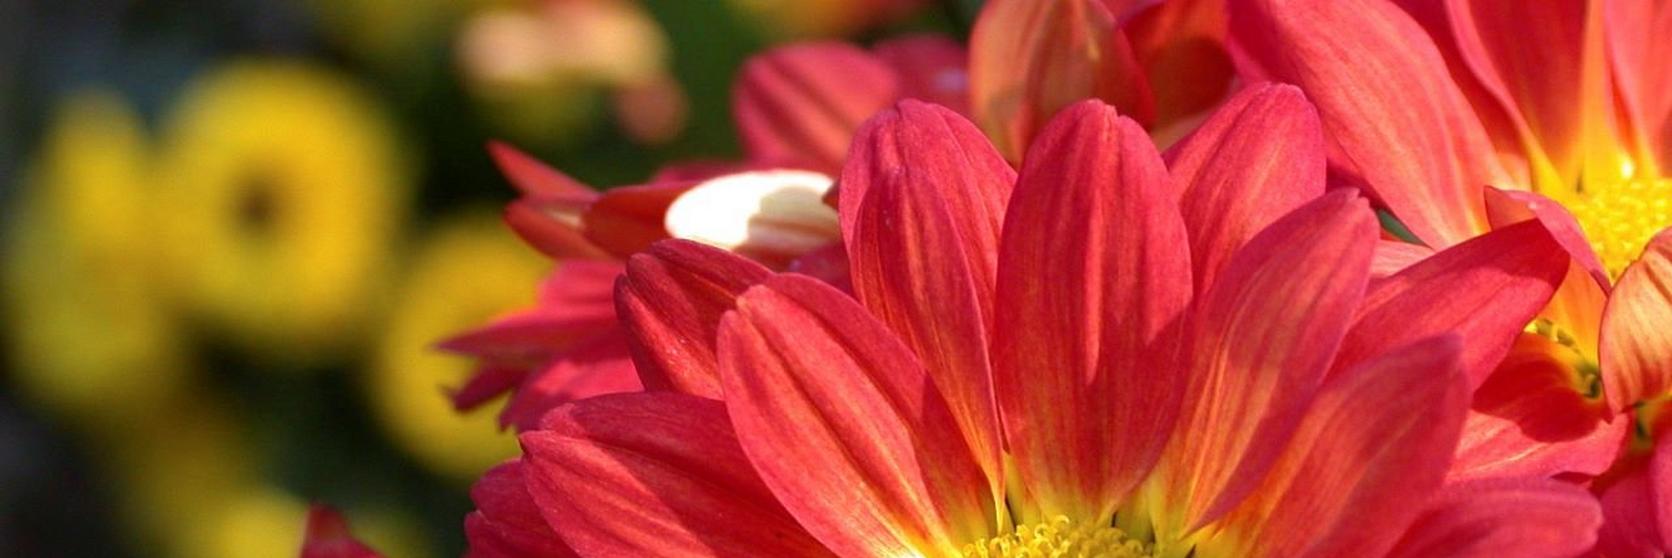 Chrysanthemum-red-flowers